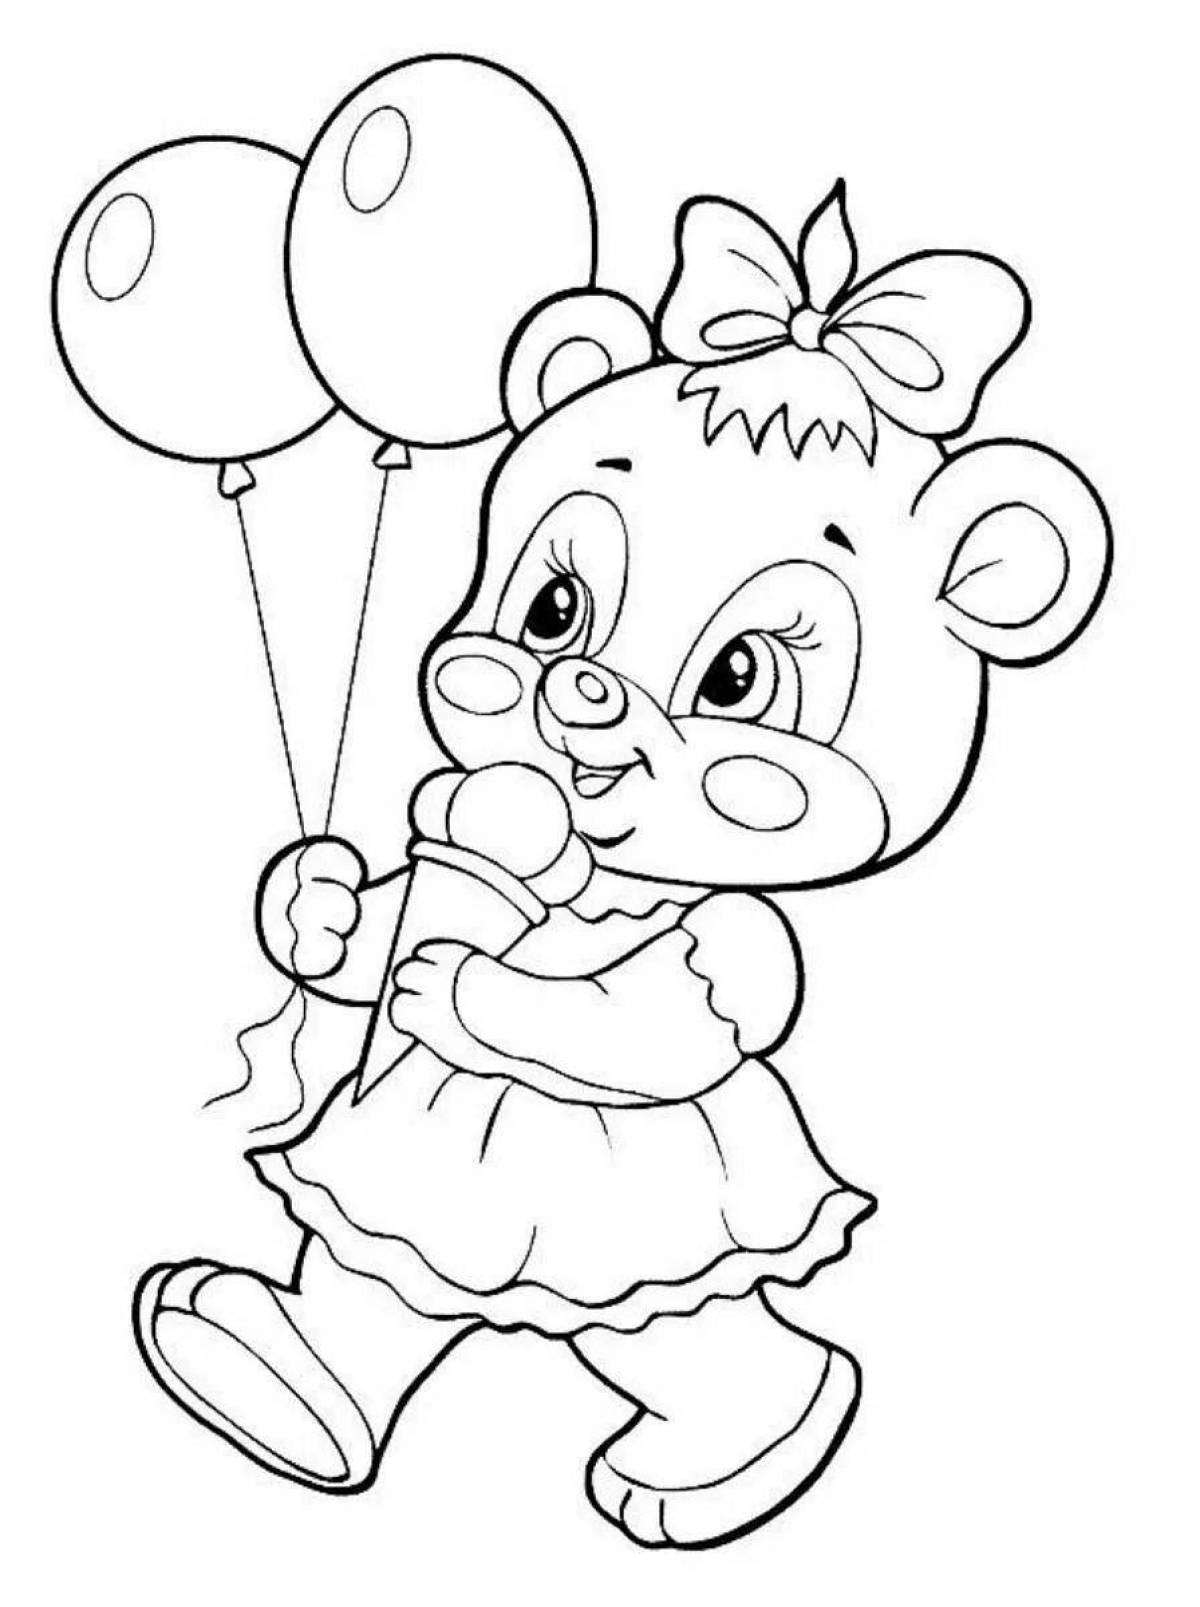 Bright teddy bear with balloons